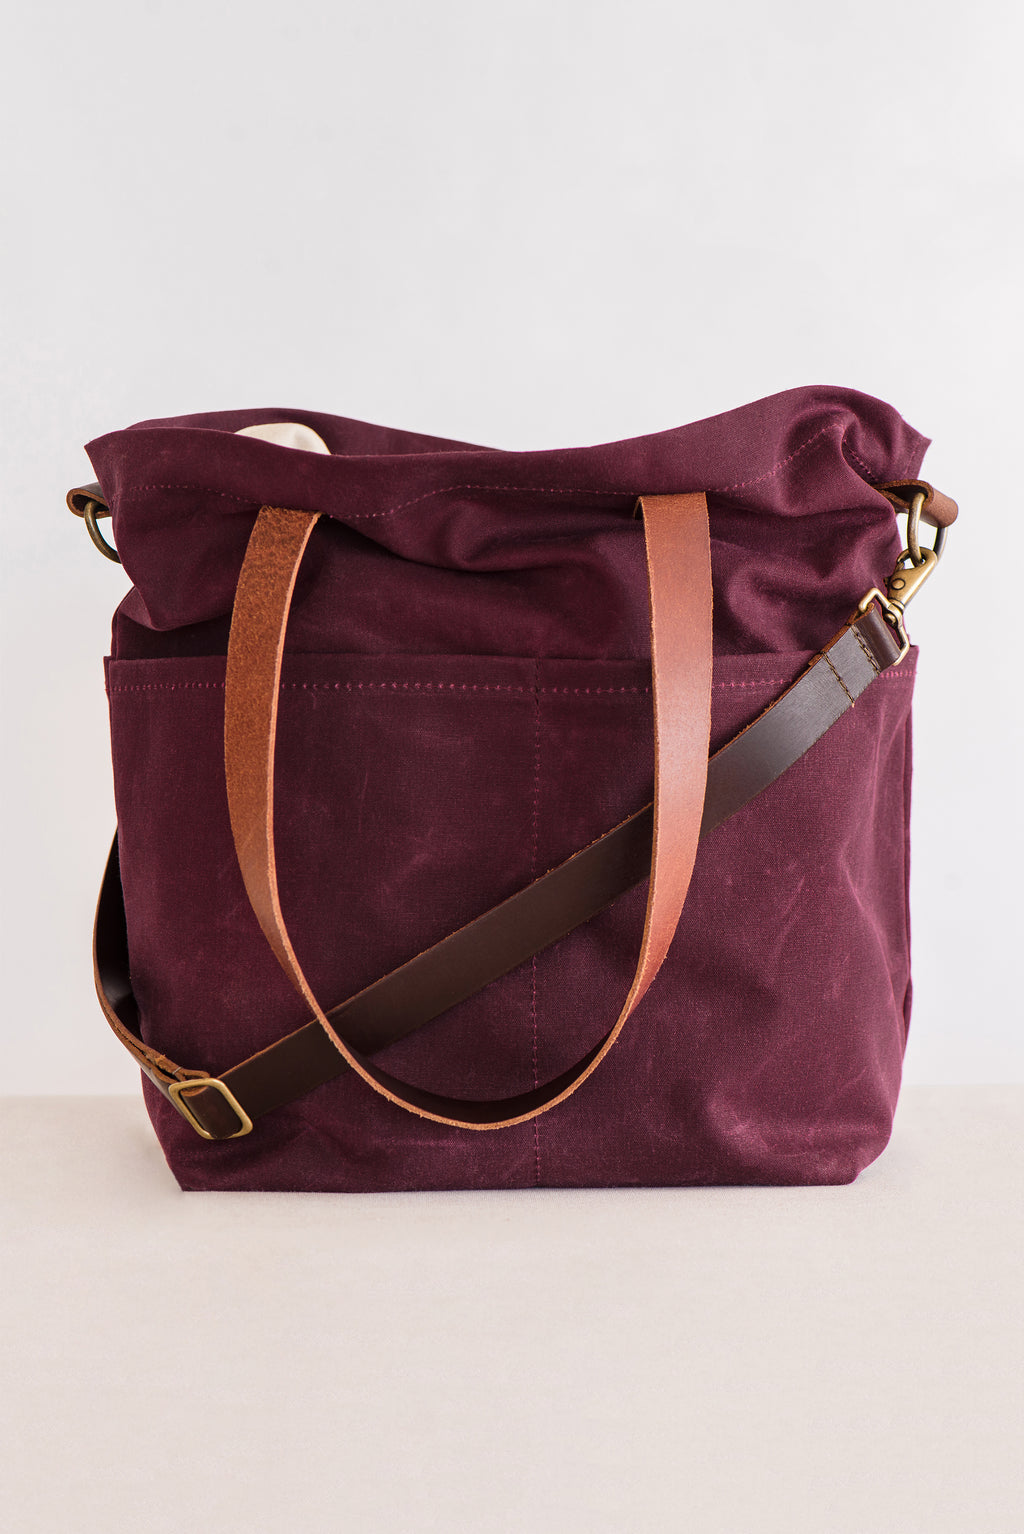 Crossbody Wallet - Brown fabric bag